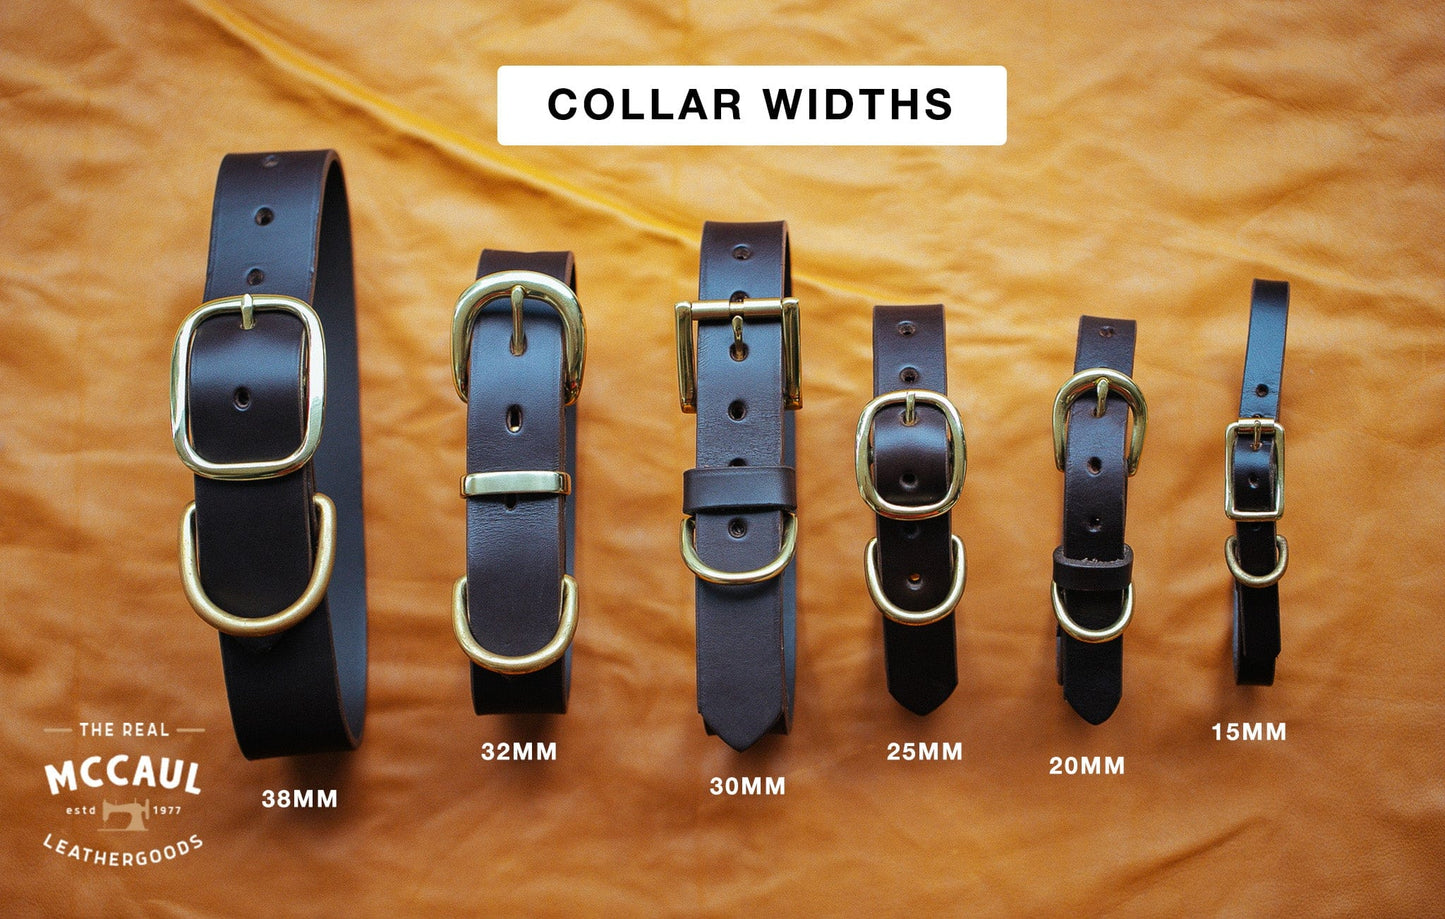 The Real McCaul Leathergoods Pet Collars & Harnesses Embossed Dog Collar - Croc Print - 30mm - Tan Australian Made Australian Owned Leather Dog Collar with Brass Fittings- Australian Made